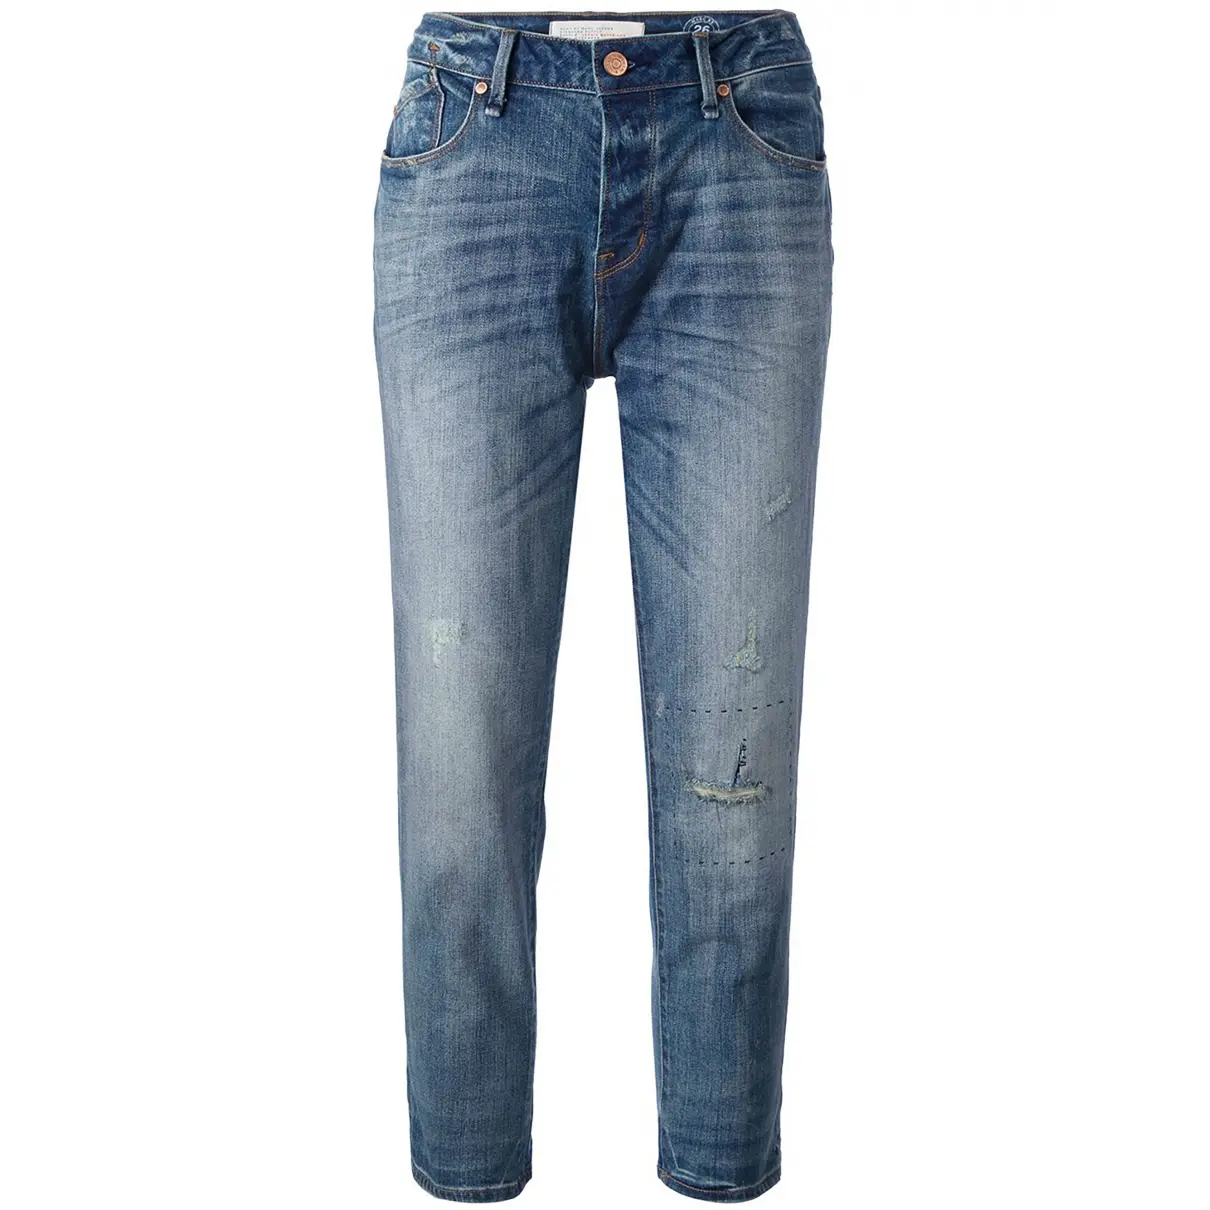 Buy Marc by Marc Jacobs Boyfriend jeans online - Vintage